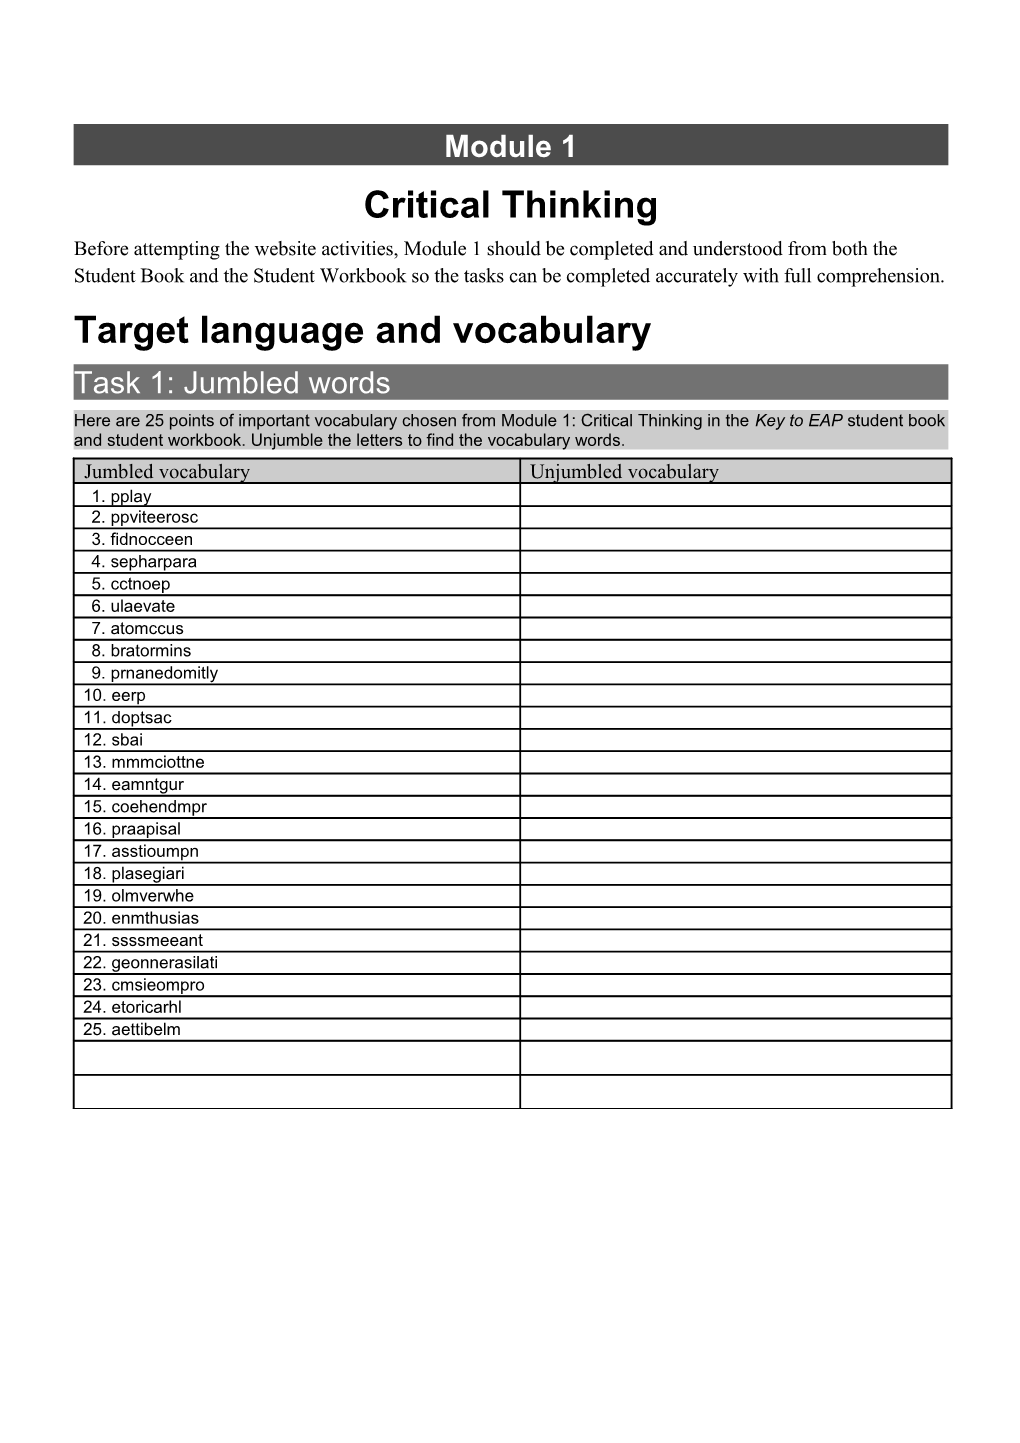 Target Language and Vocabulary